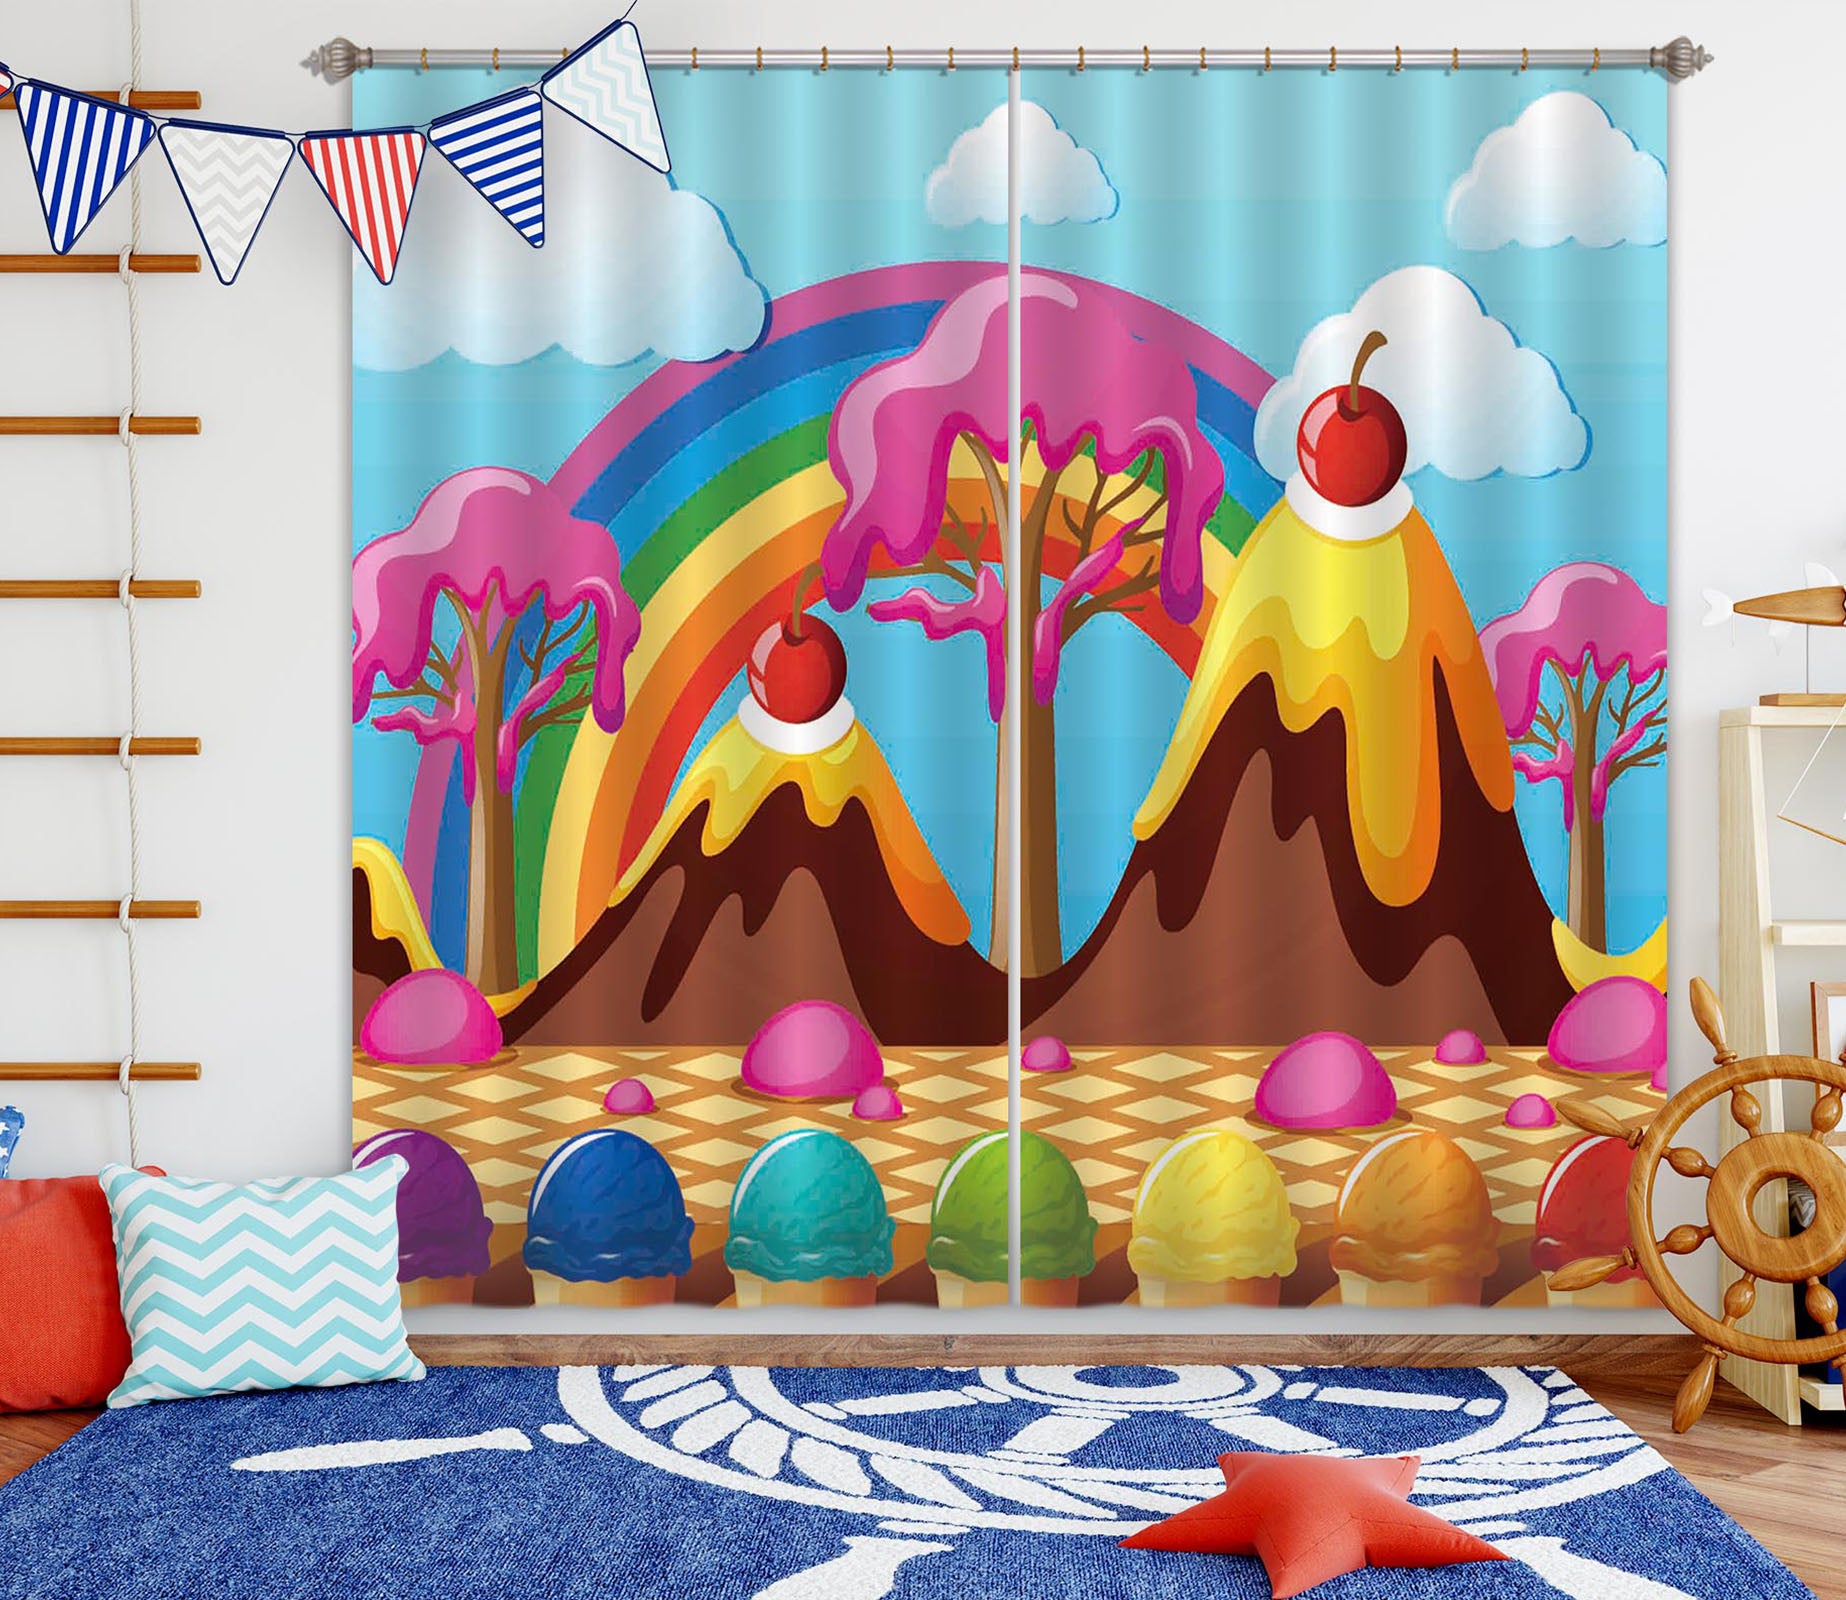 3D Cake House 779 Curtains Drapes